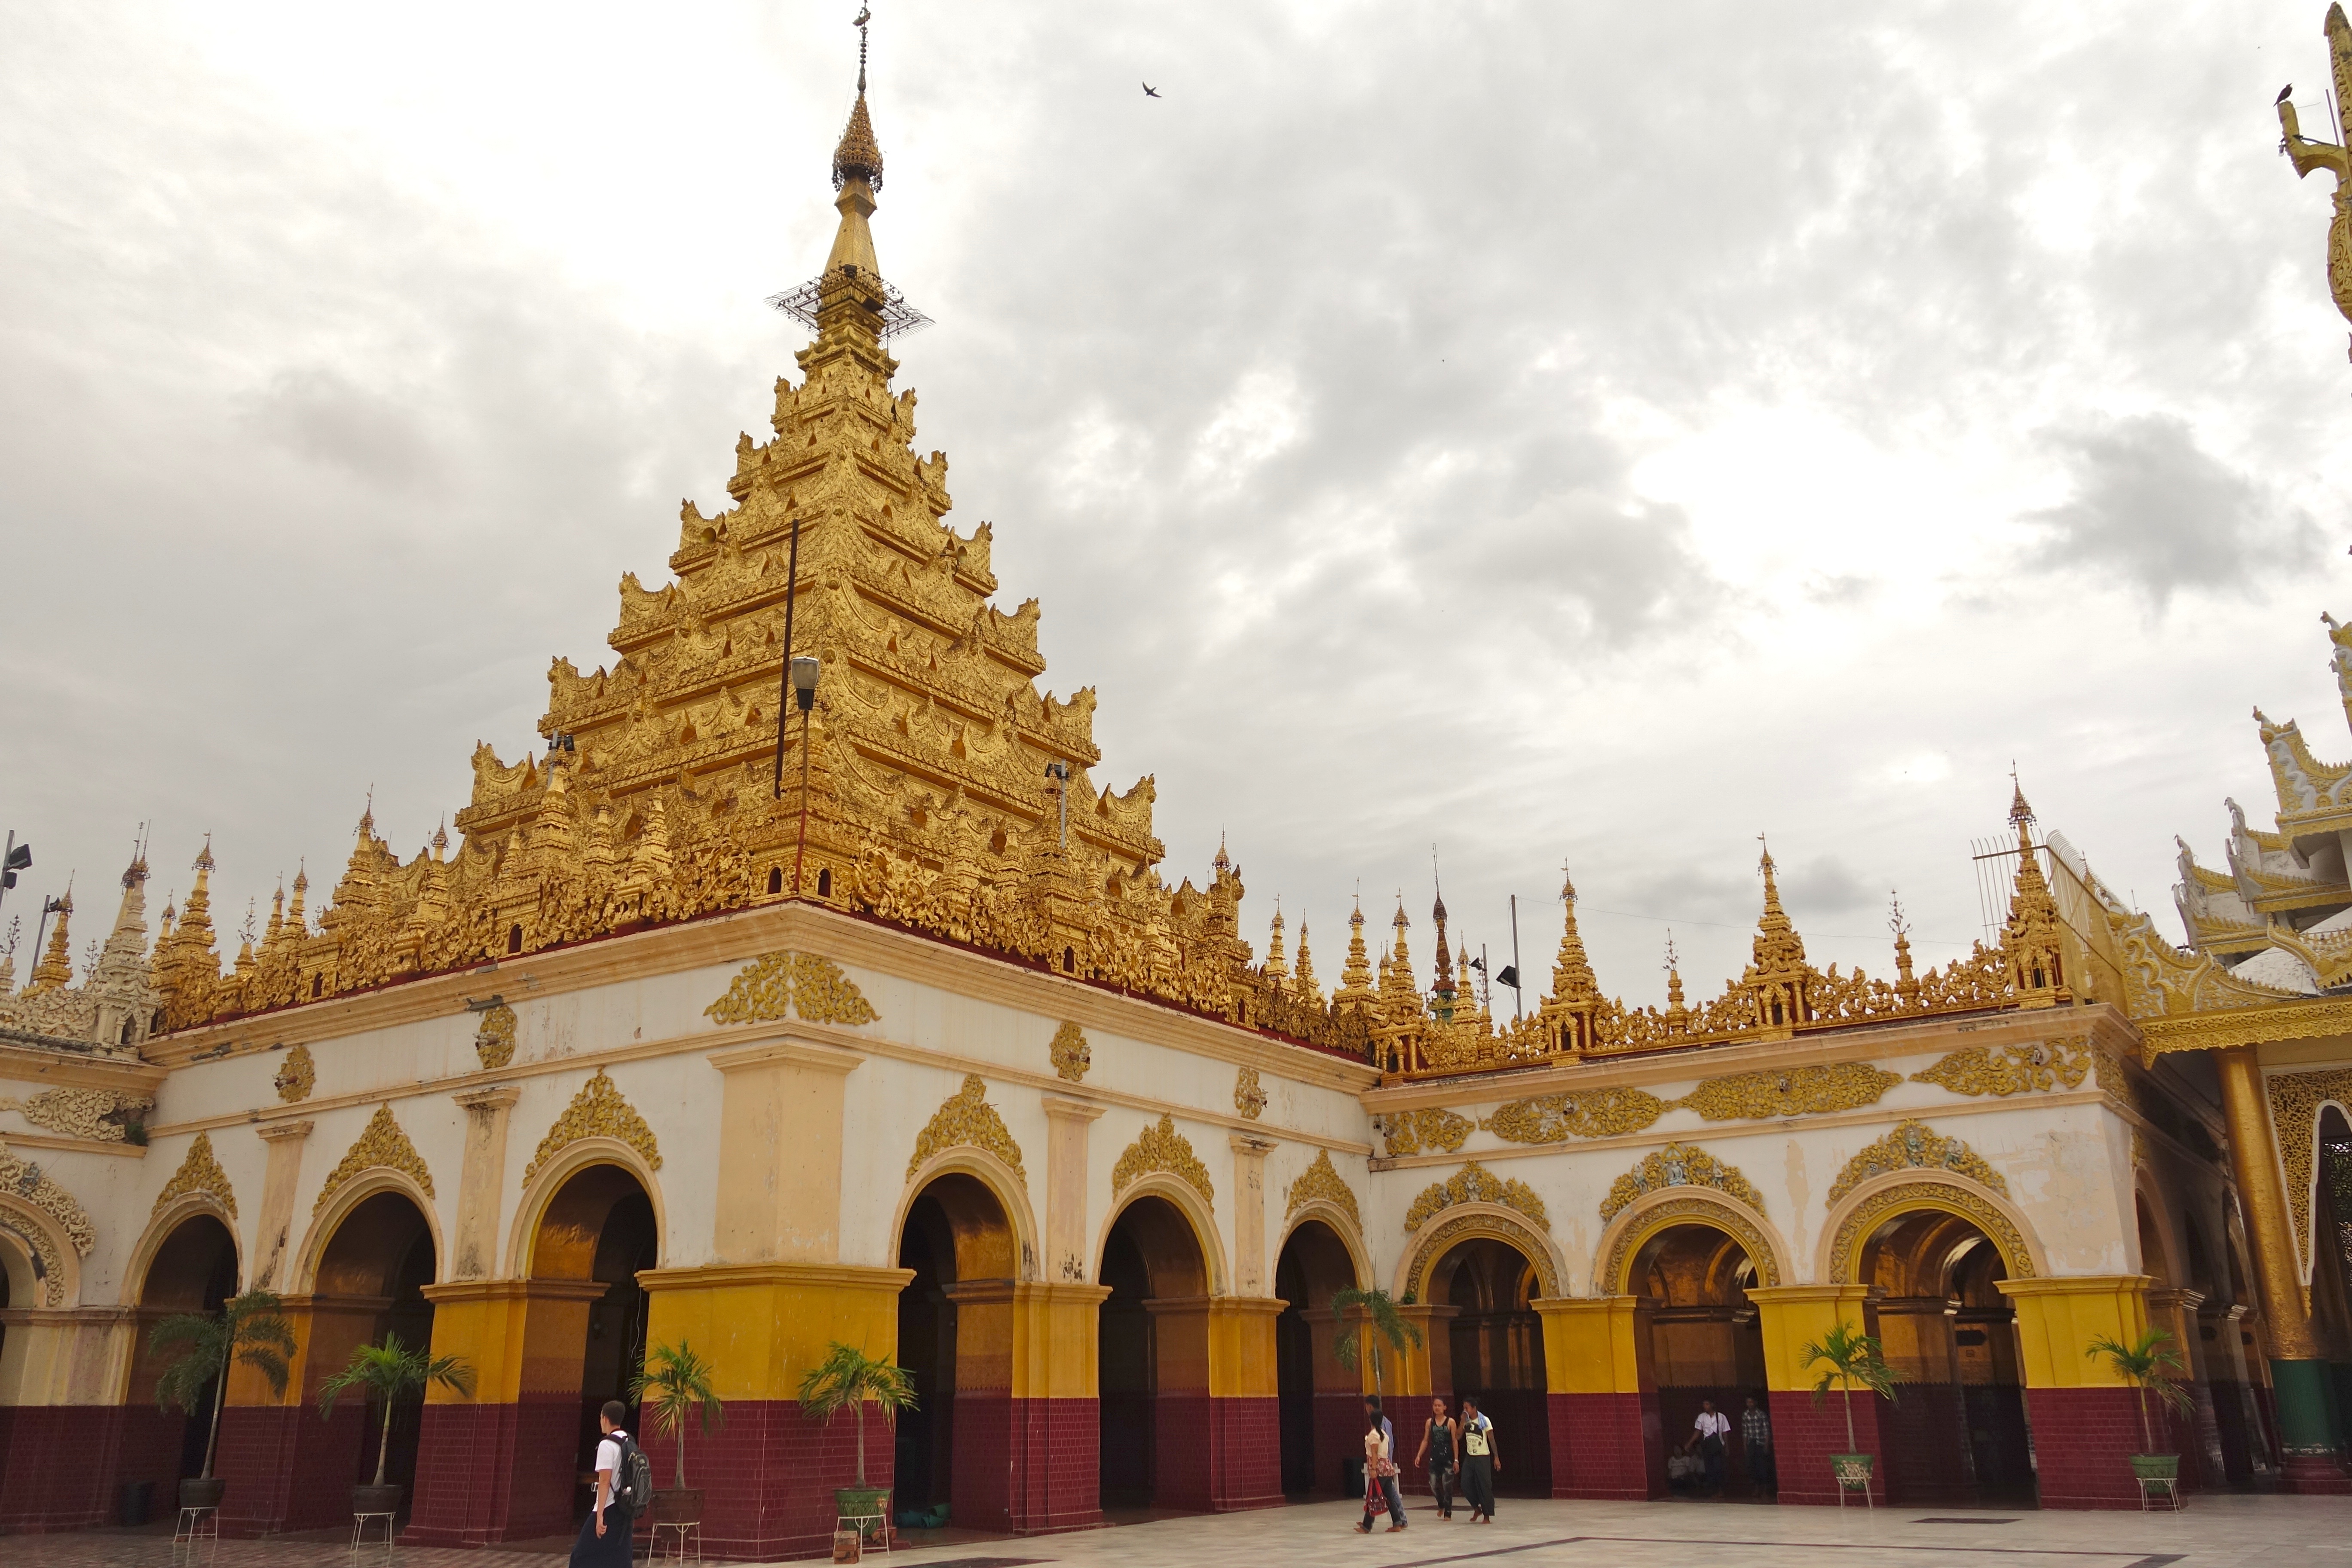 677417 descargar imagen religioso, pagoda mahamuni, birmania: fondos de pantalla y protectores de pantalla gratis